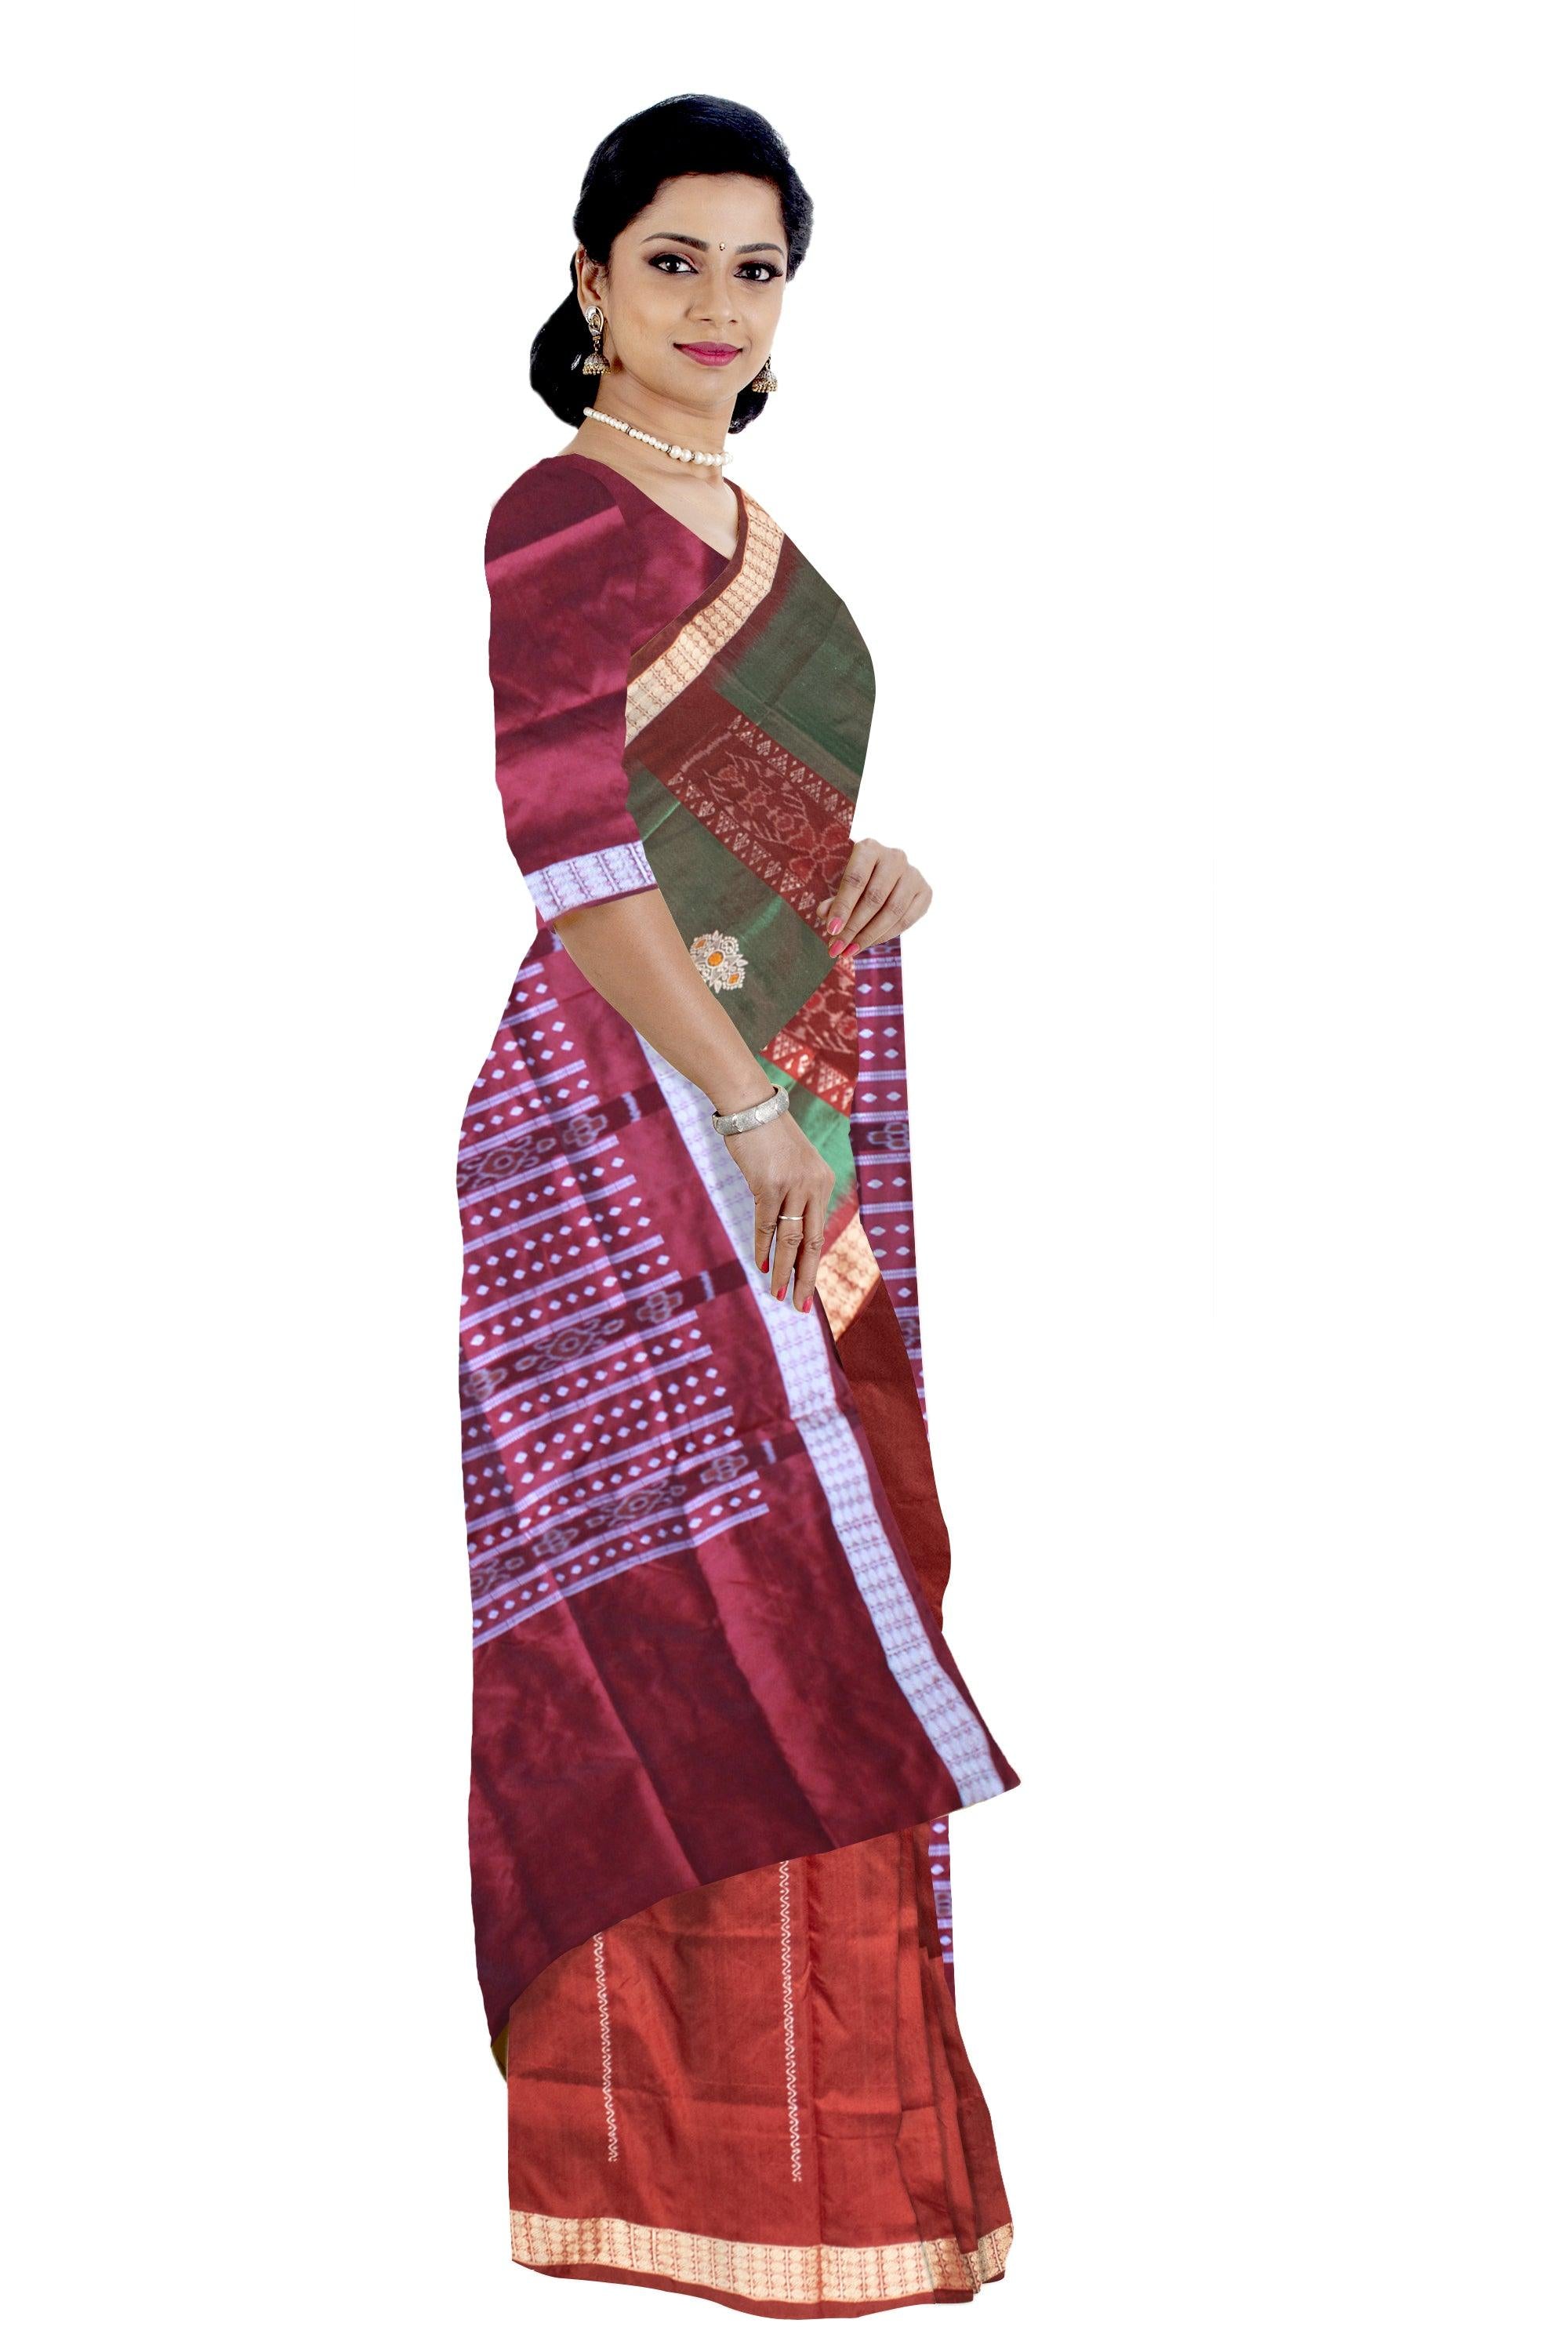 Patli Design Sambalpuri  pata Saree in Green & Maroon color body in Bomkei Pattern  & Flower Design(with Blouse Piece) - Koshali Arts & Crafts Enterprise